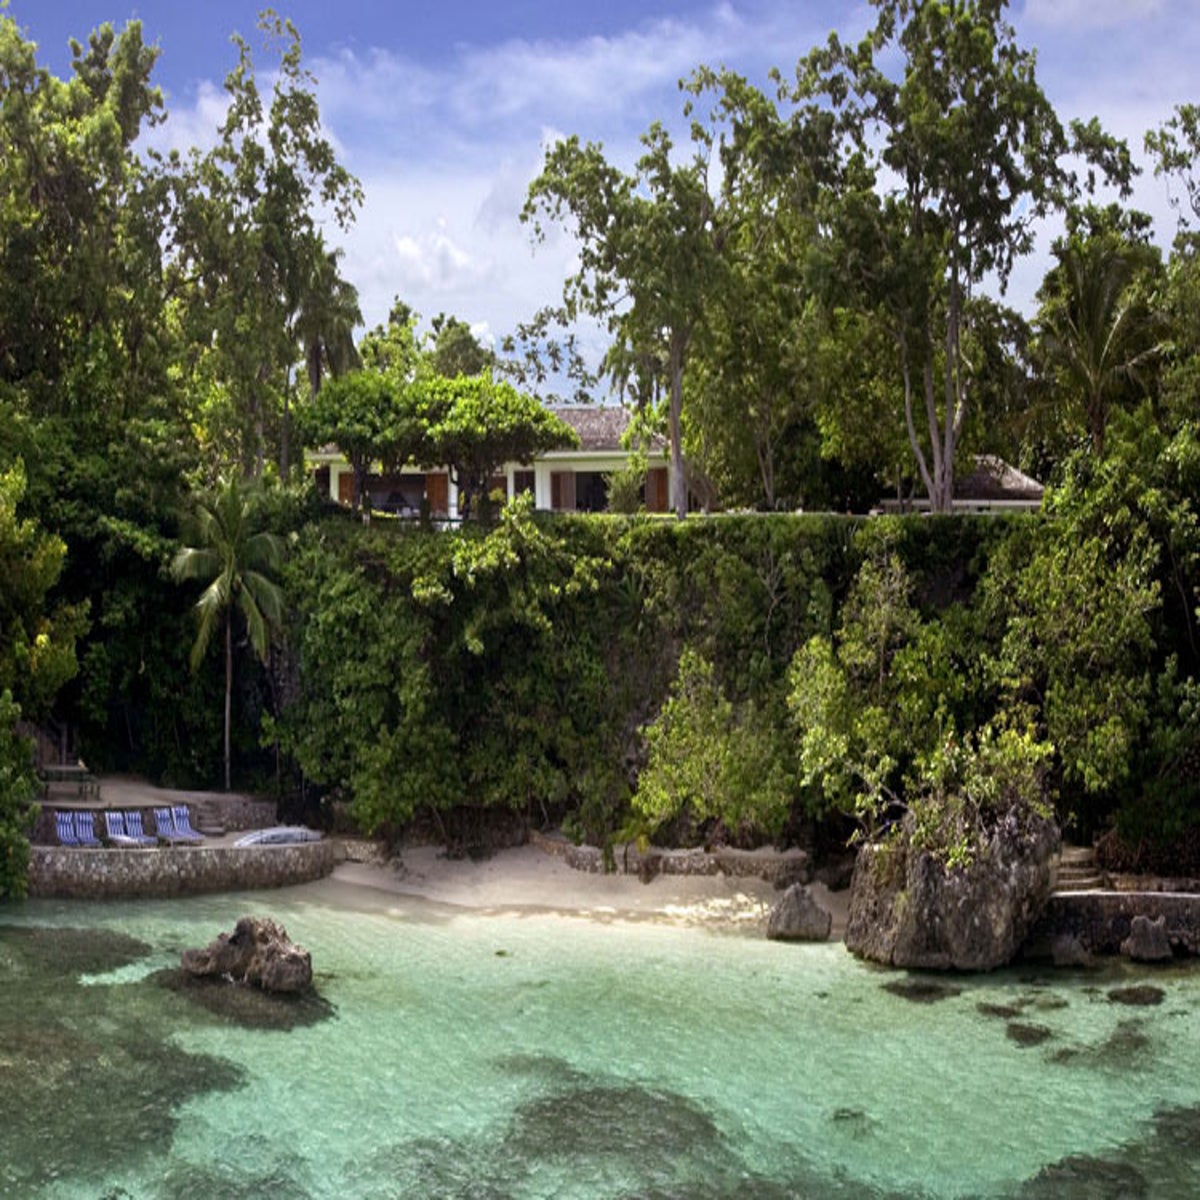 Lavish Goldeneye resort where Ian Fleming created James Bond